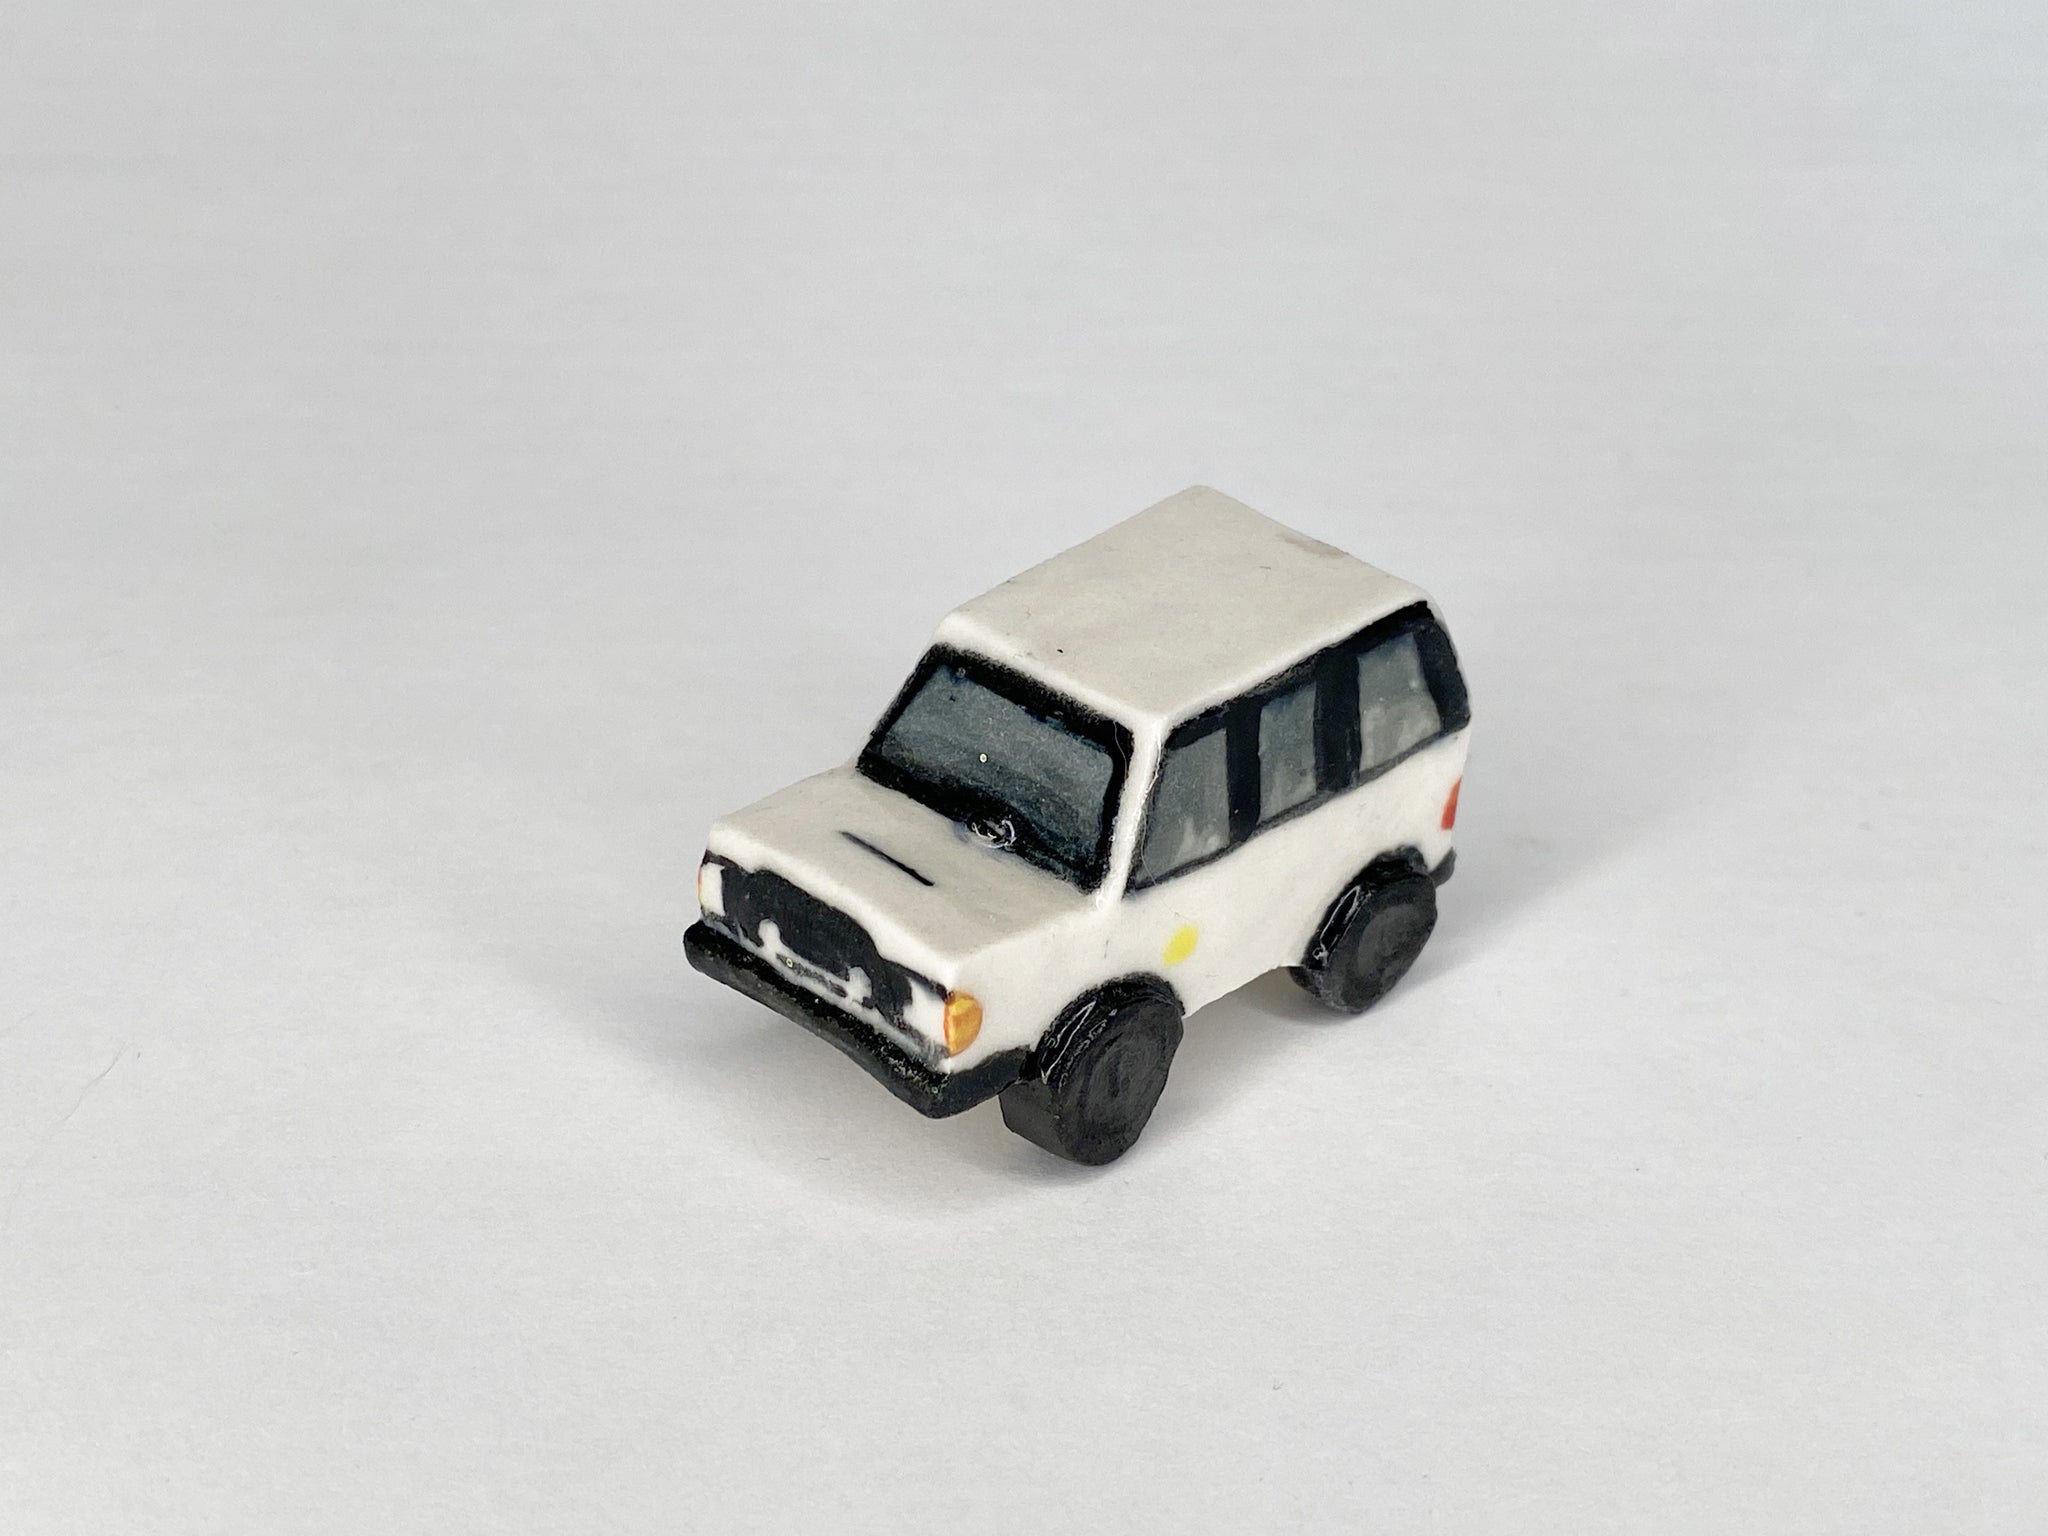 1982 White Toyota Land Cruiser